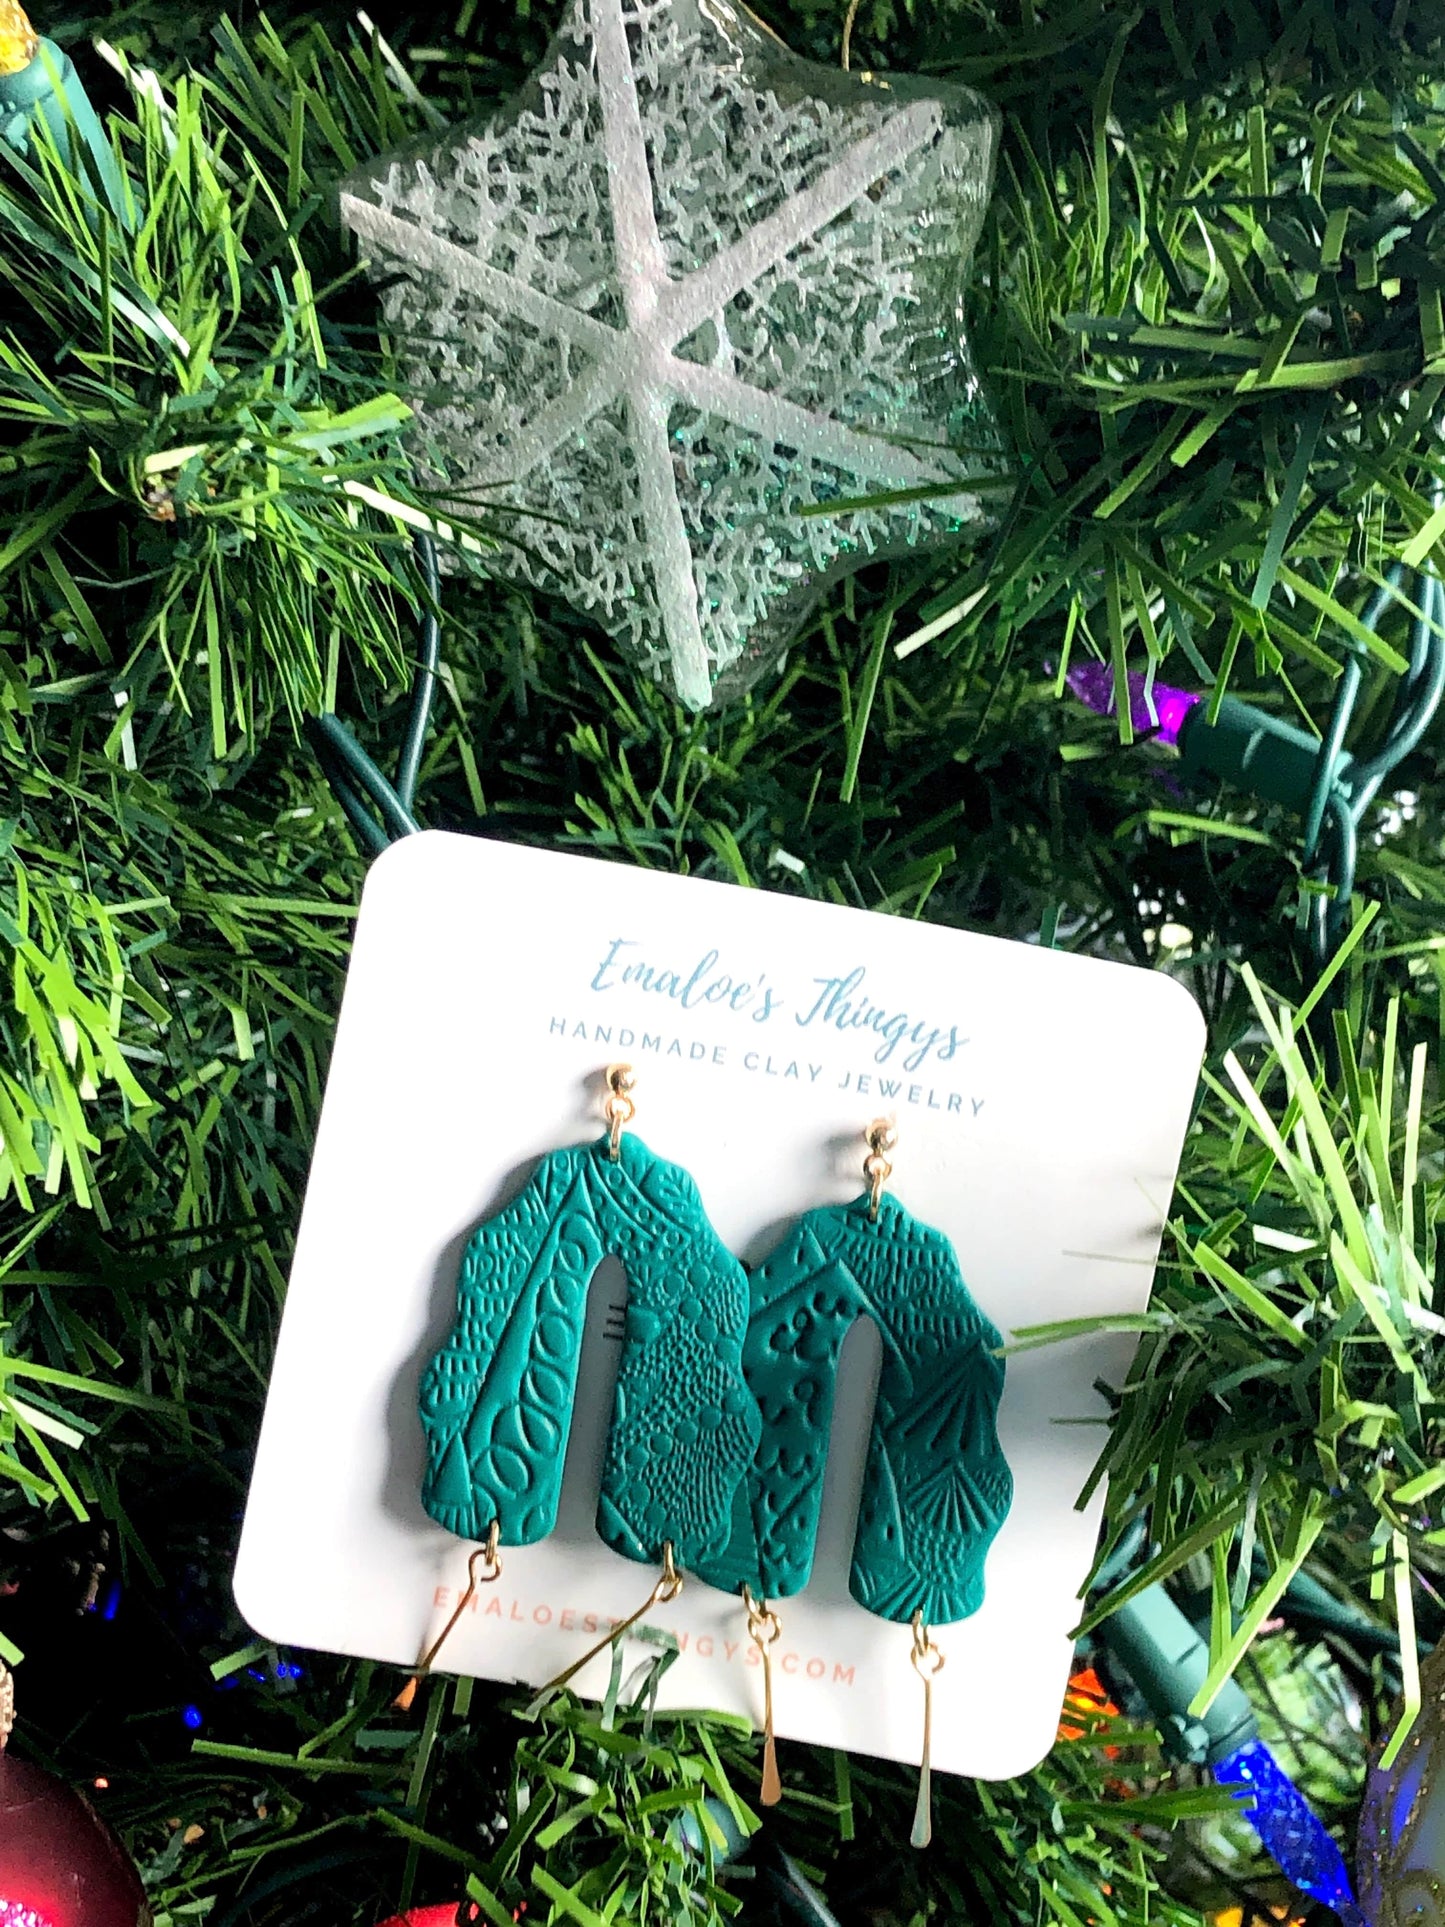 Earrings Evie Evie Pine Green Earrings, Pine Green Polymer Clay Earrings, Christmas Gifts